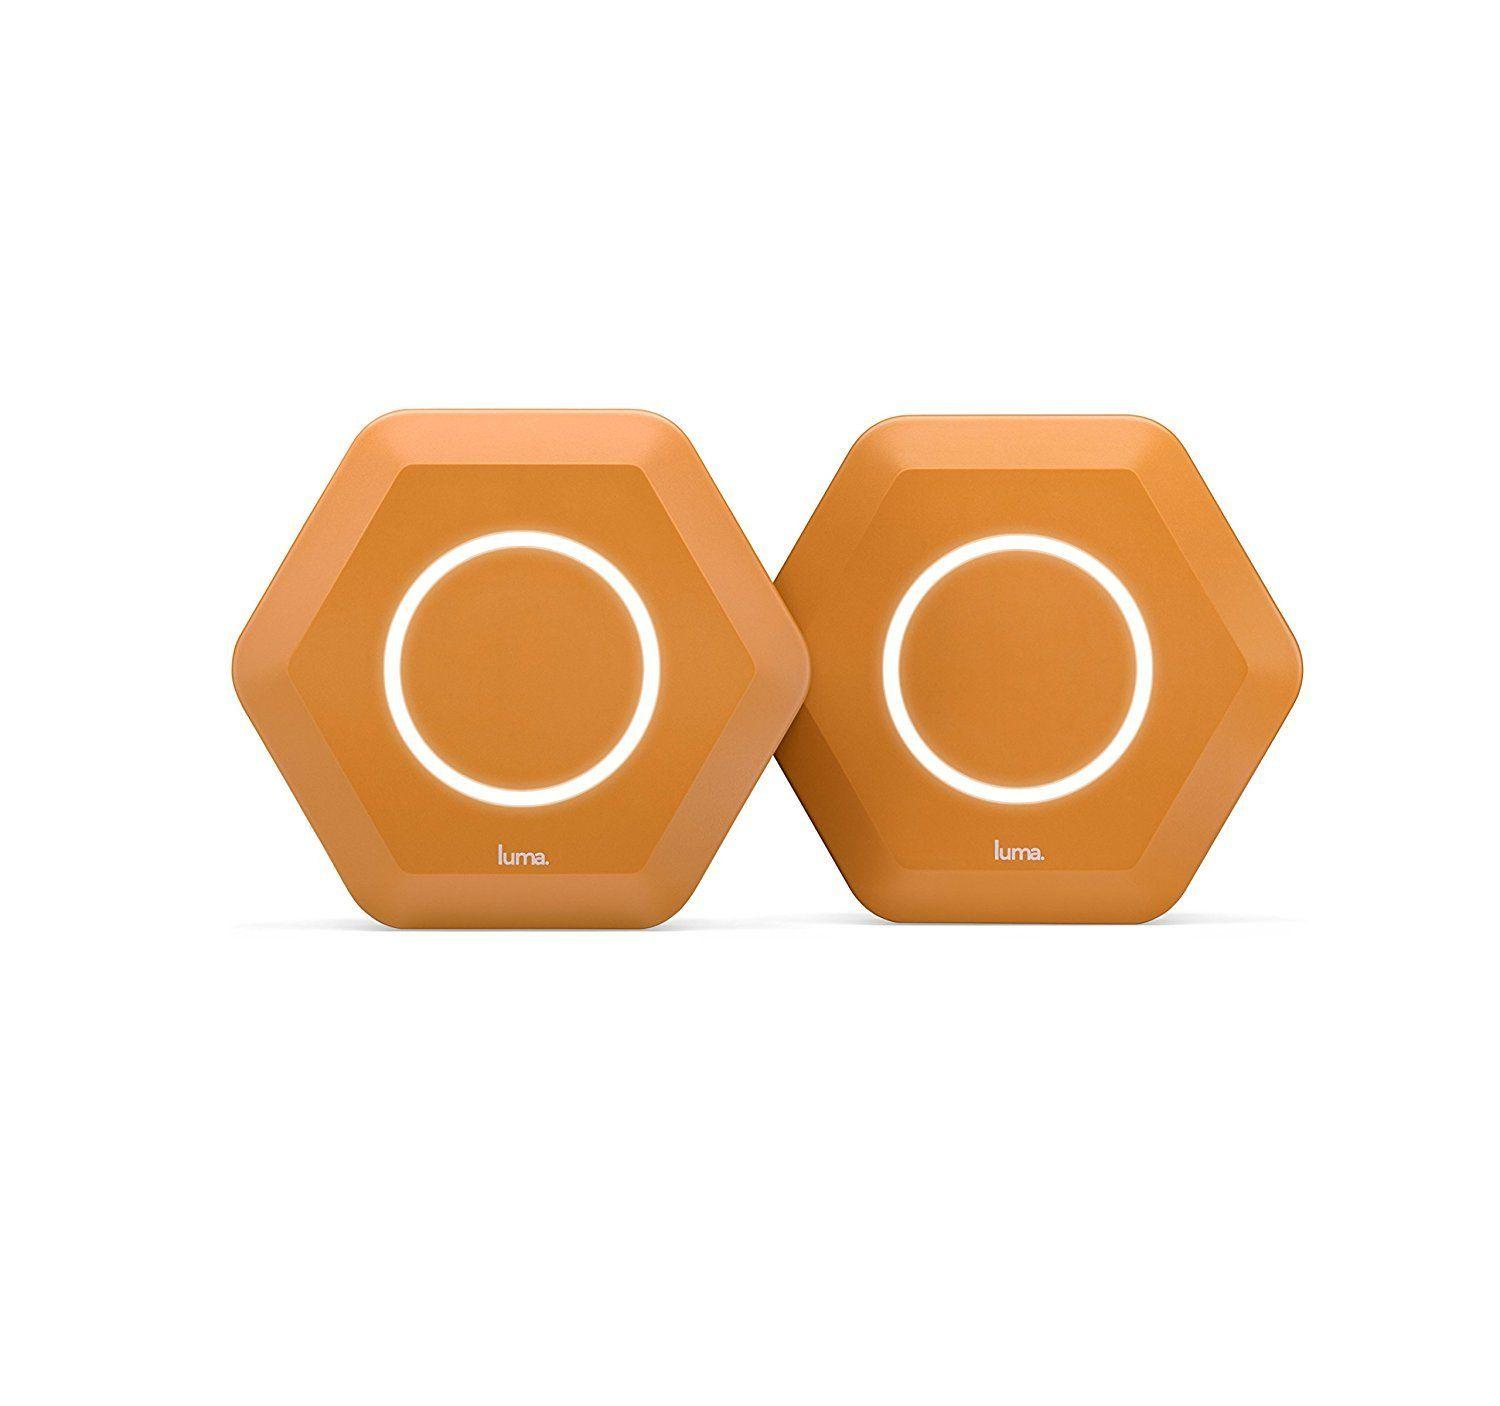 Orange WiFi Logo - Amazon.com: Luma Whole Home WiFi (2 Pack - Orange) - Replaces WiFi ...